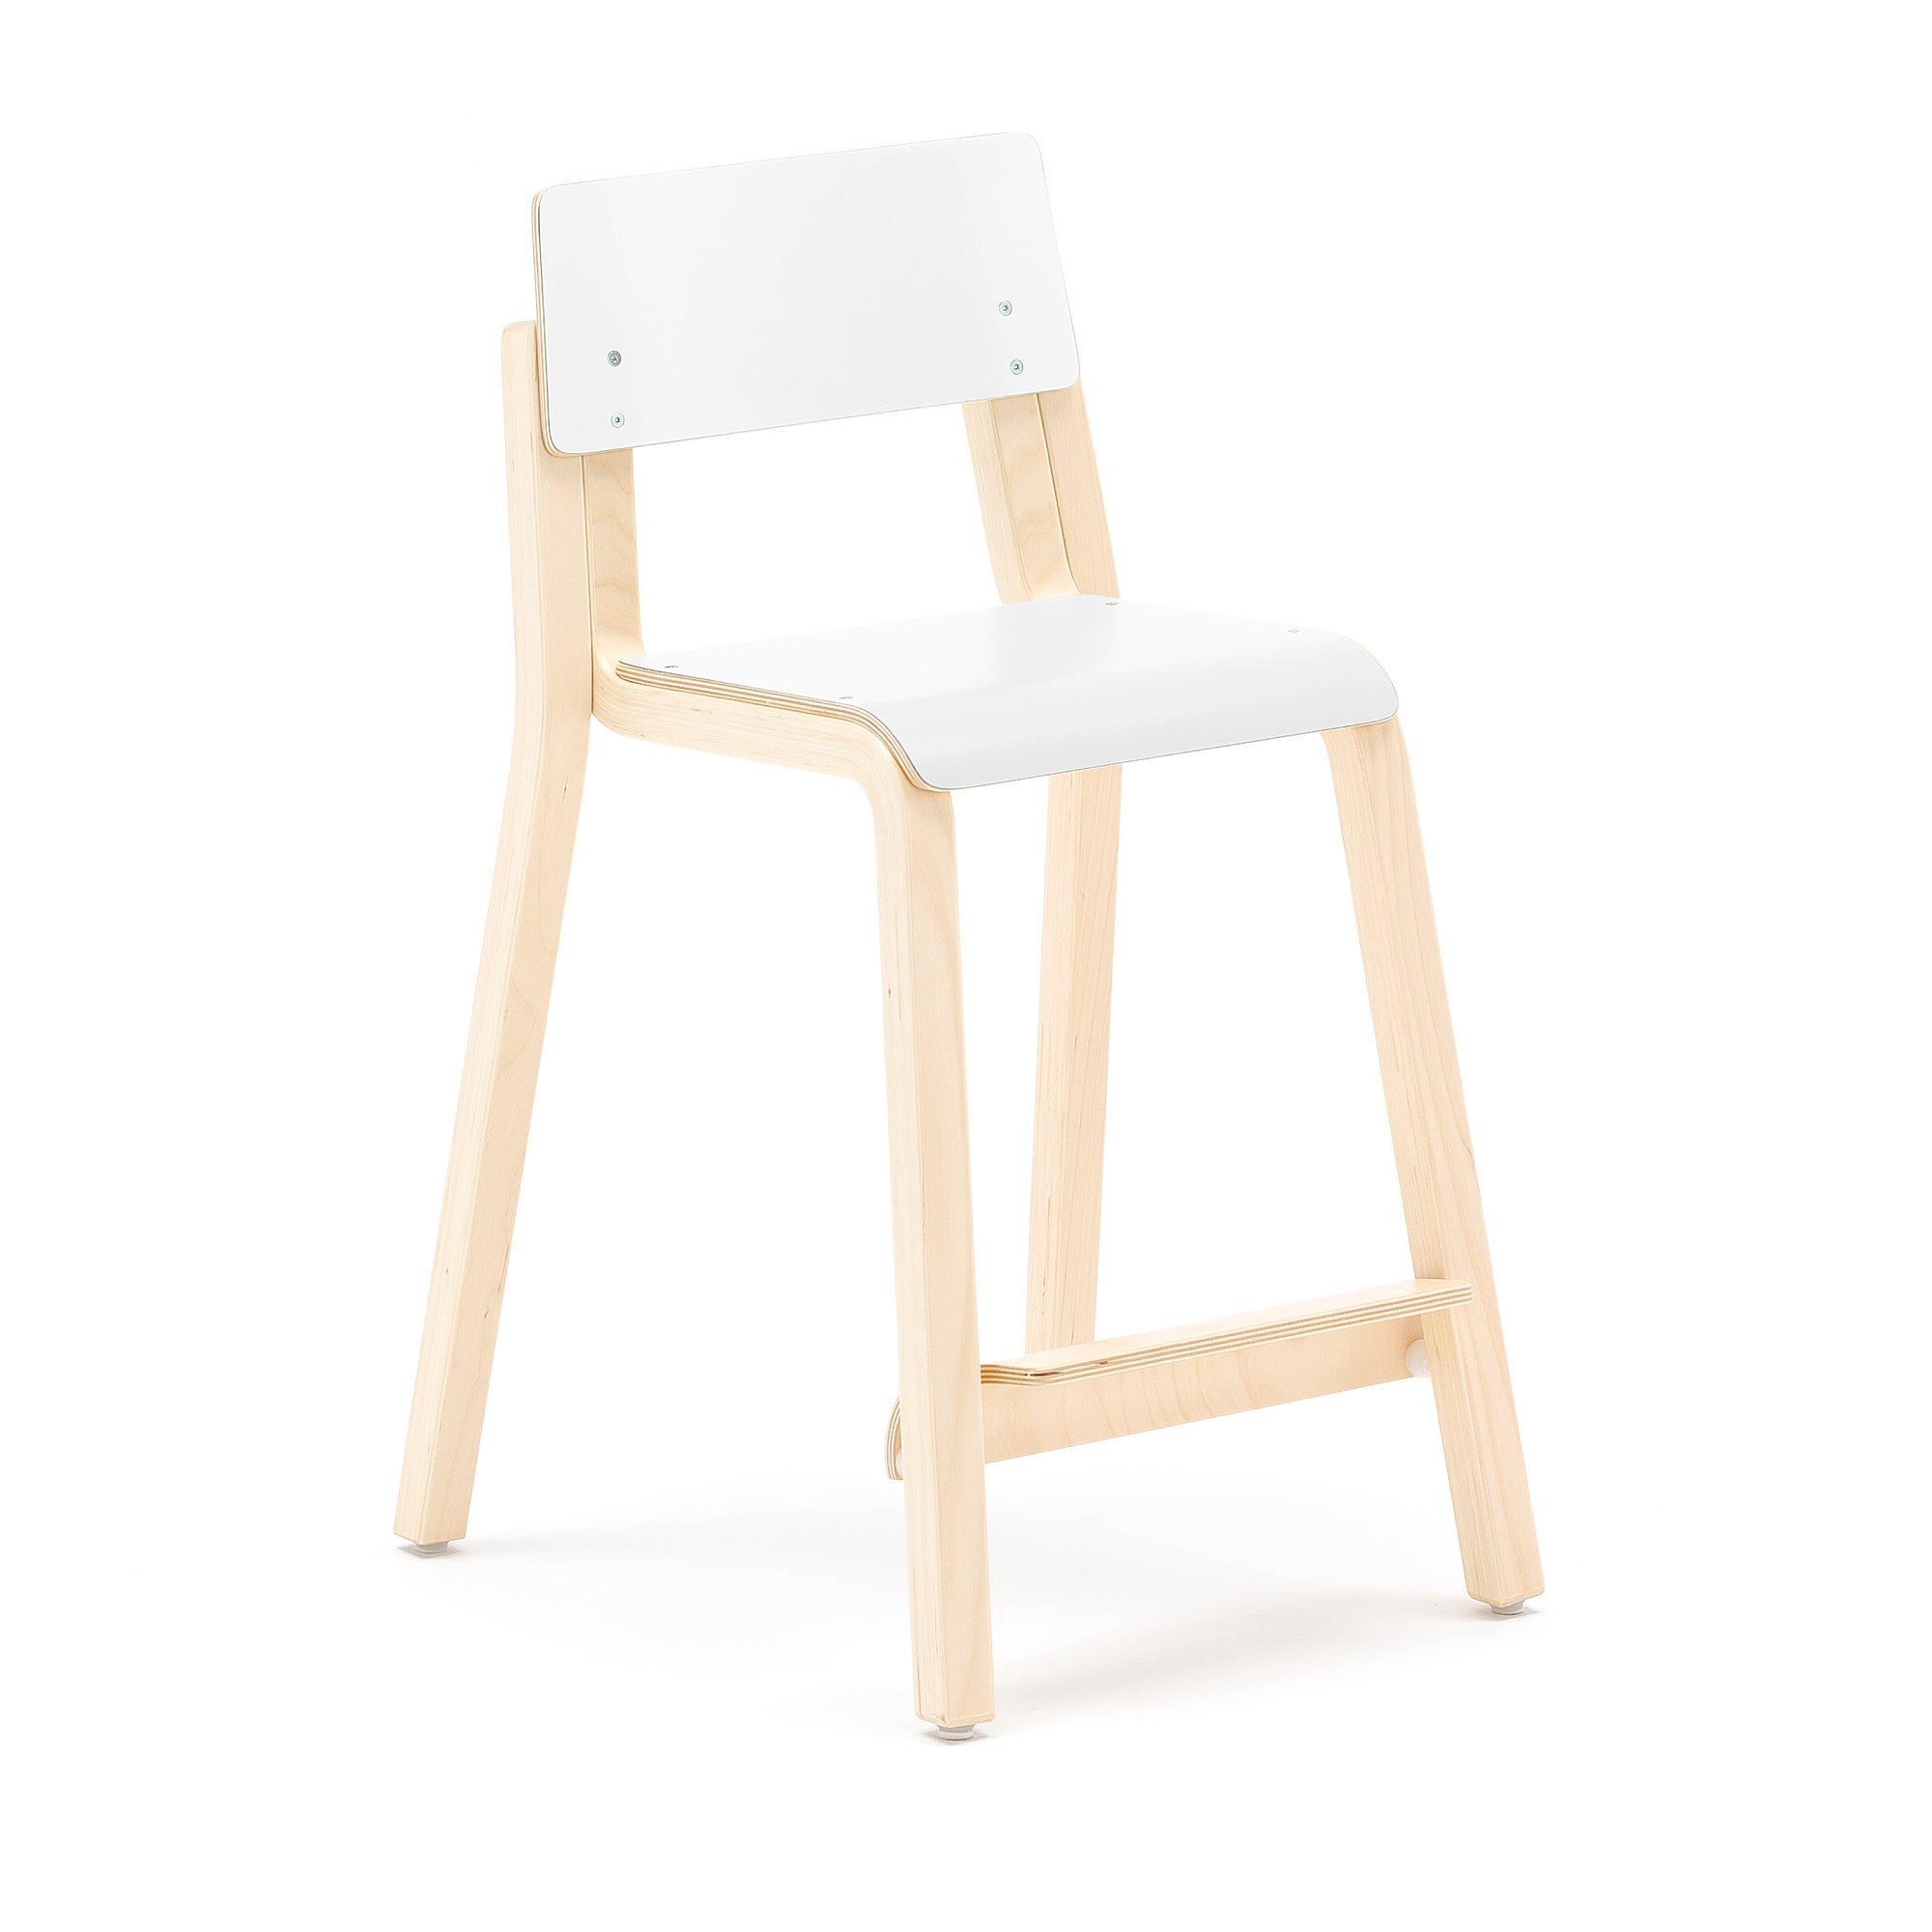 Tall children's chair DANTE, H 500 mm, birch, white laminate